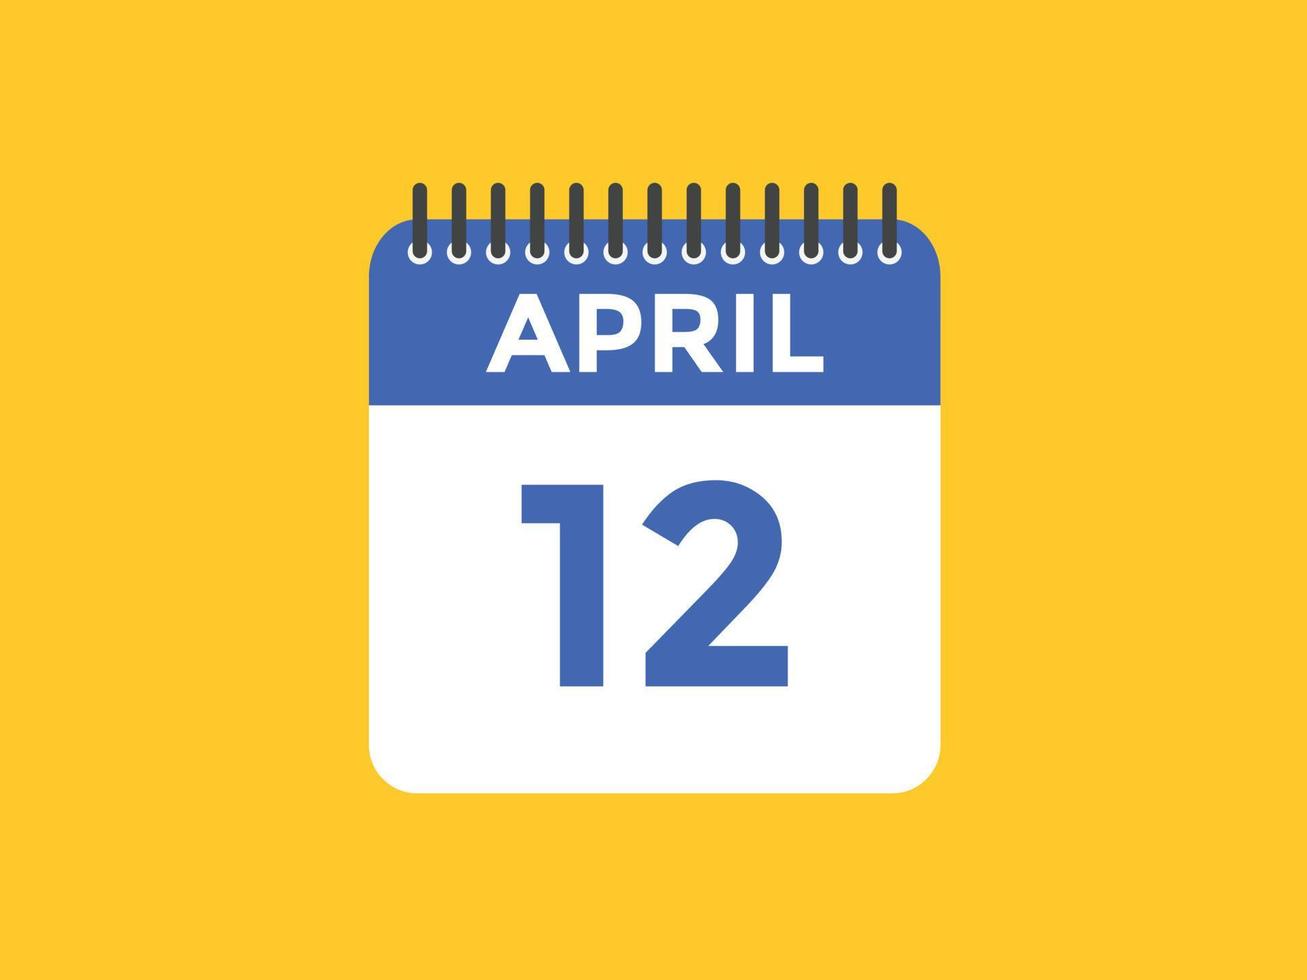 april 12 calendar reminder. 12th april daily calendar icon template. Calendar 12th april icon Design template. Vector illustration